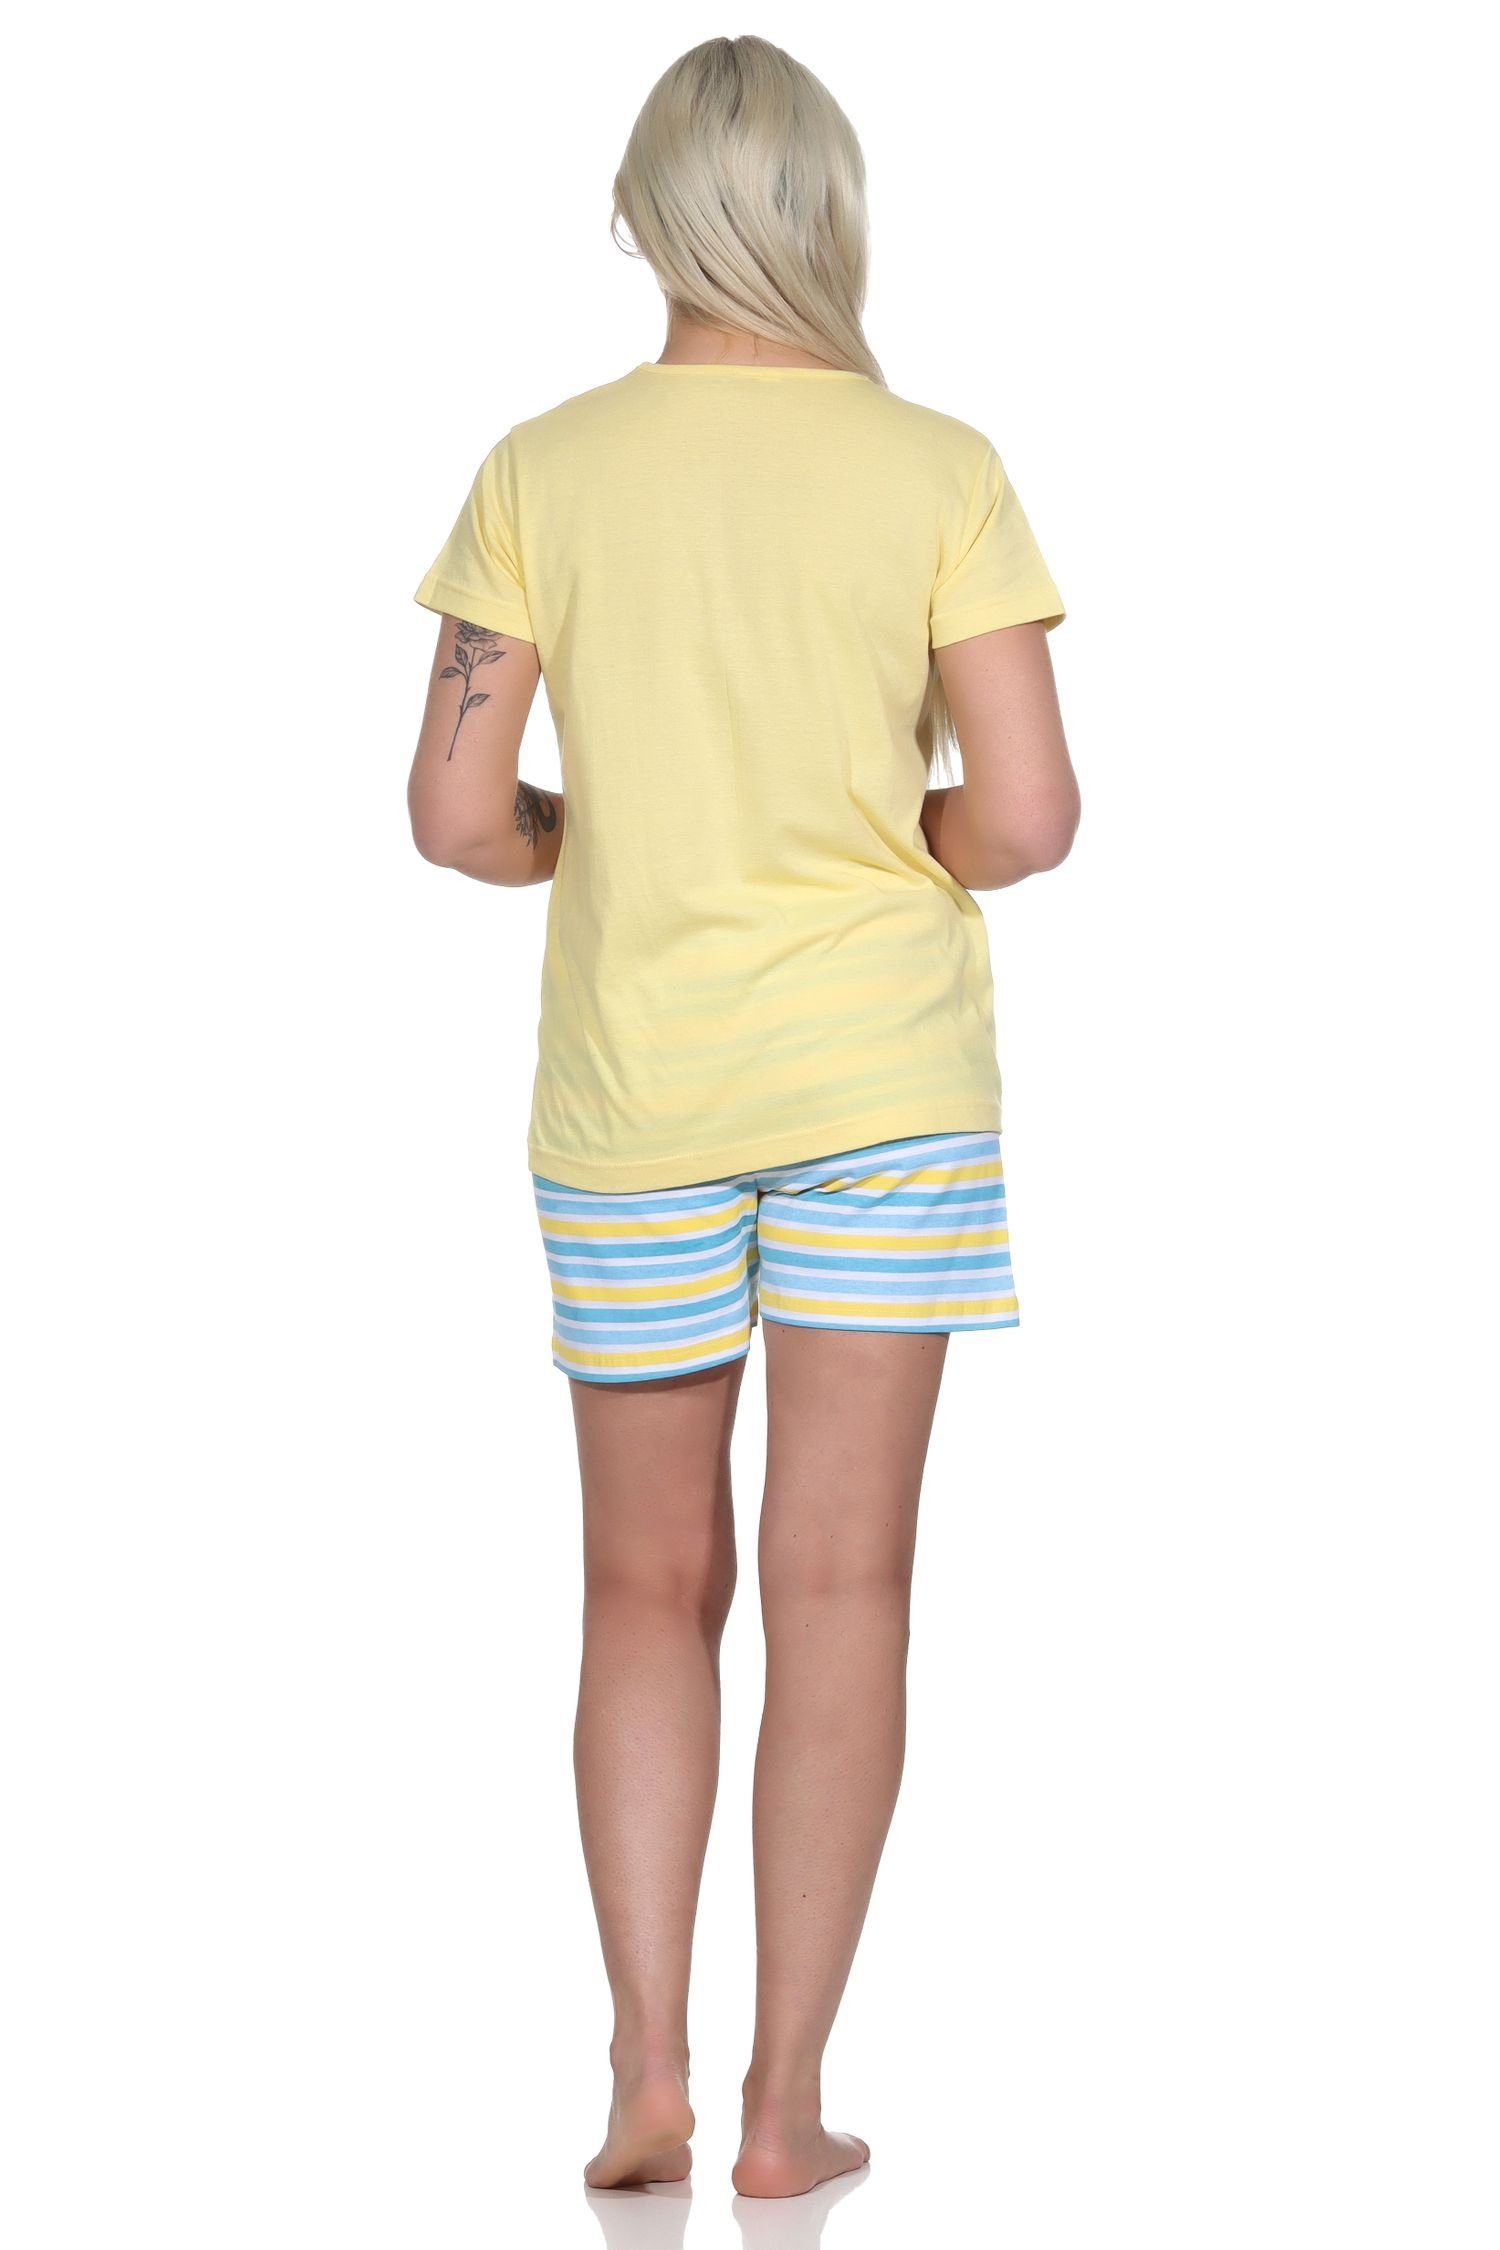 RELAX by Normann kurzarm Pyjama Damen mit gelb und Shorty Front-Print Pyjama Ringel-Optik